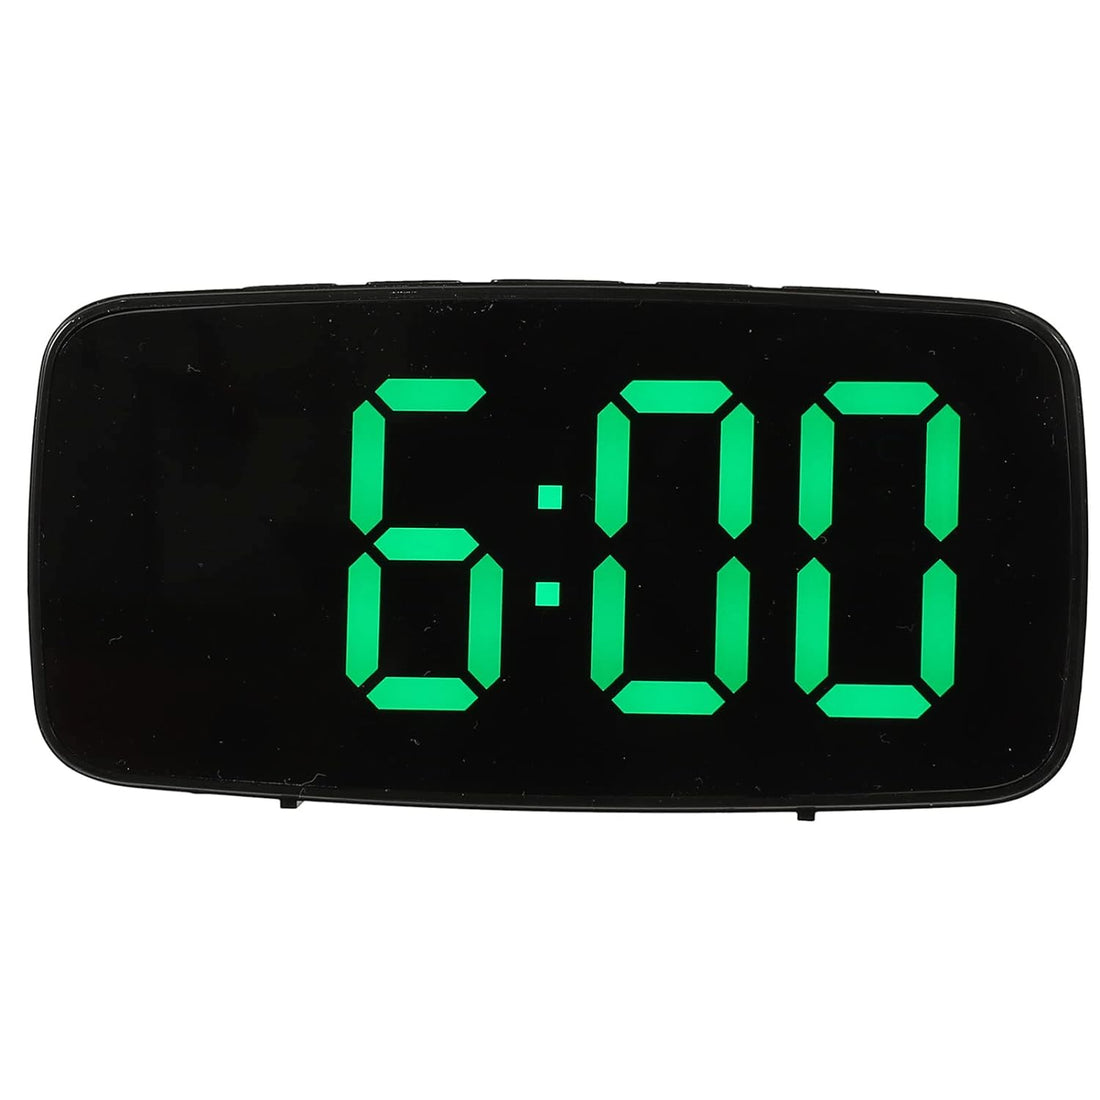 LED Alarm Clocks LED Alarm Clock Digital Temperature Clock Desktop Display Time Table Clock Battery Operated Bedside Alarm Clocks for Heavy Sleeper Large Number Display